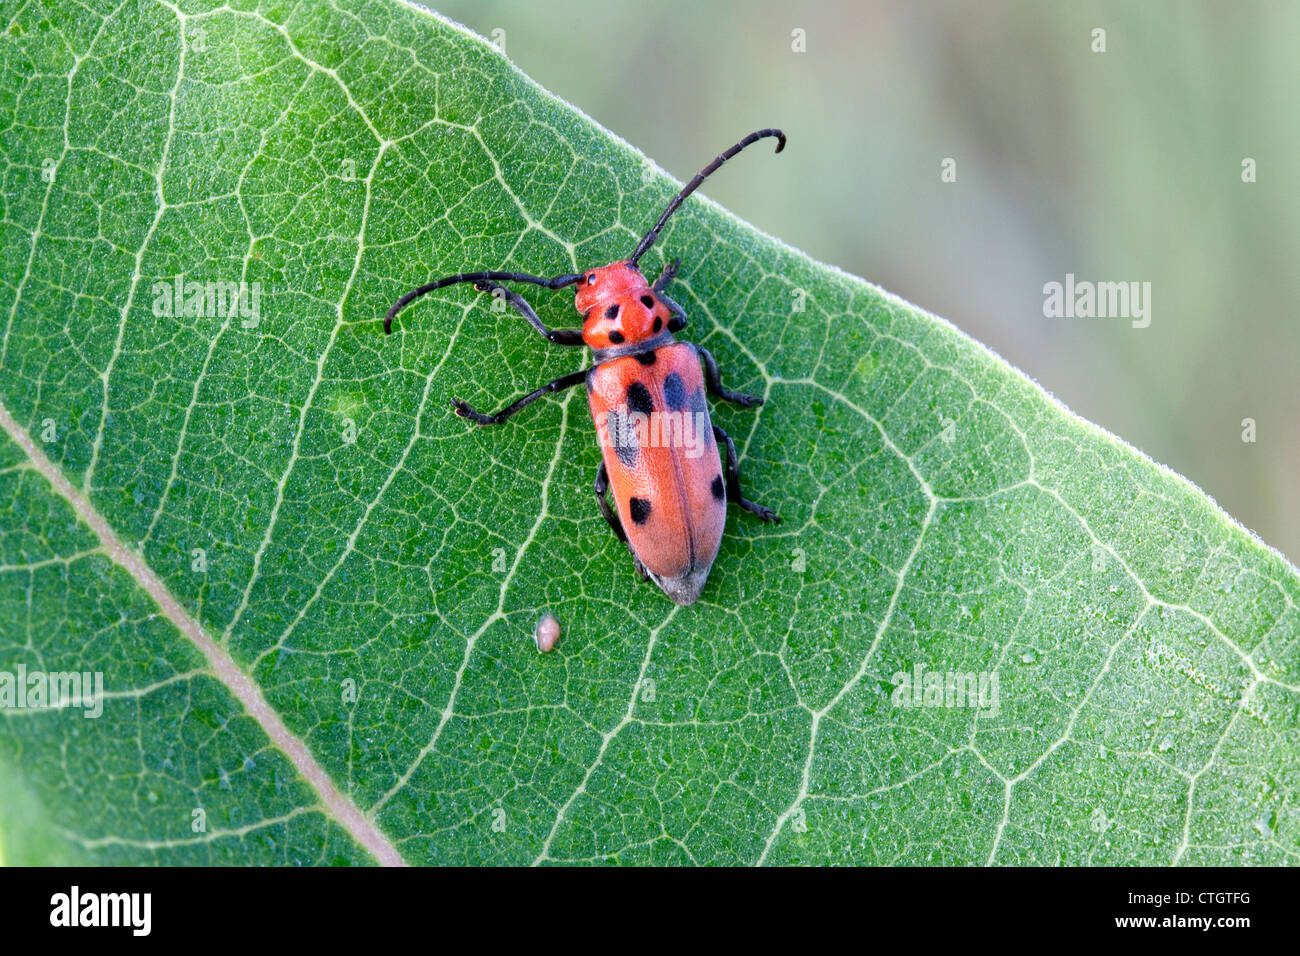 Rote Seidenpflanze Käfer Tetraopes tetrophthalmus Blatt auf gemeinsame Seidenpflanze Asclepias syriaca Eastern United States Stockfoto